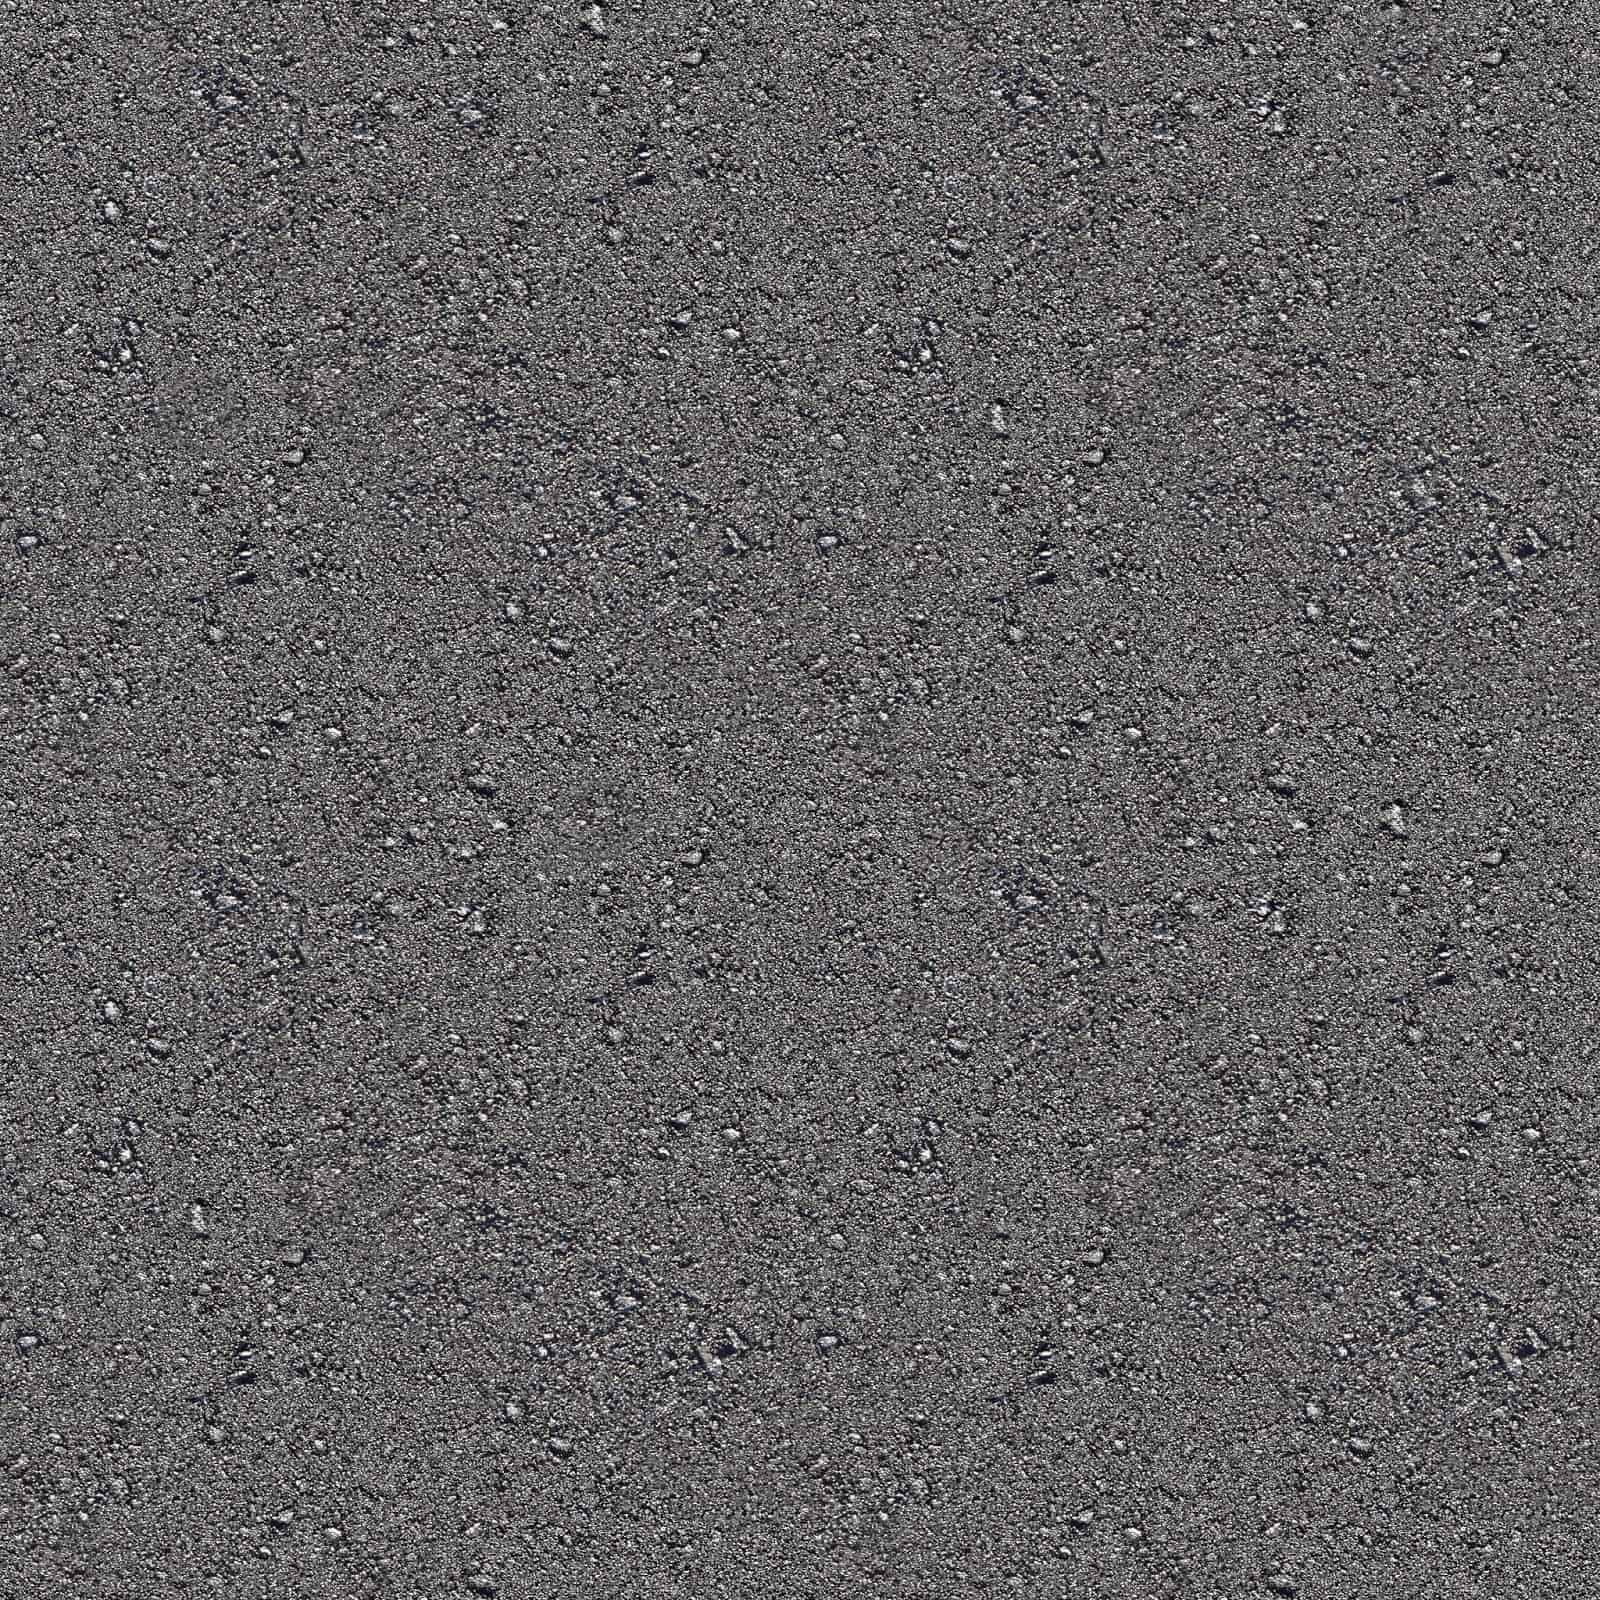 1380_Castaway Commons_Seamless_tarmac_asphalt_texture